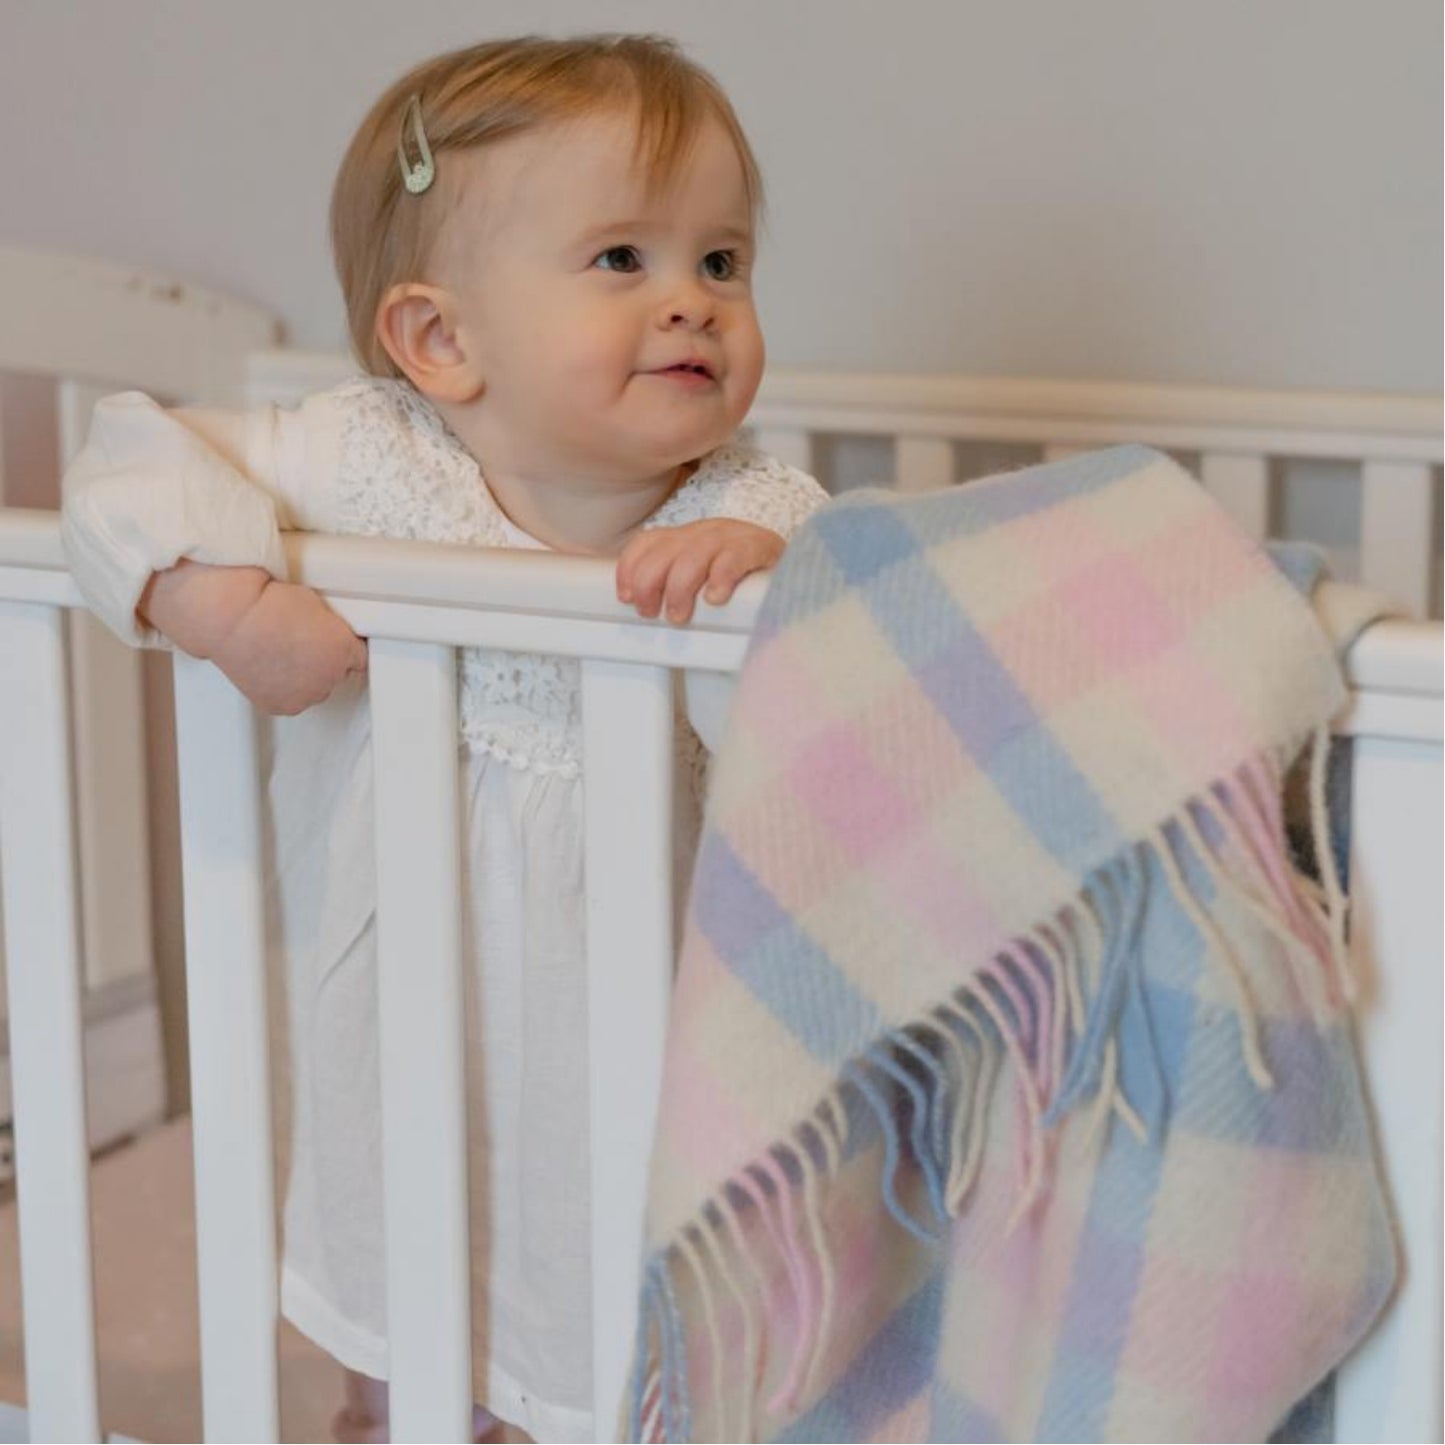 John Hanly Irish Wool Baby Blanket | White, Pink & Blue Border Block Check | 100% Pure Irish Wool Blanket | Lifestyle: Smiling Baby in Bed with Blanket | BeoVERDE Ireland